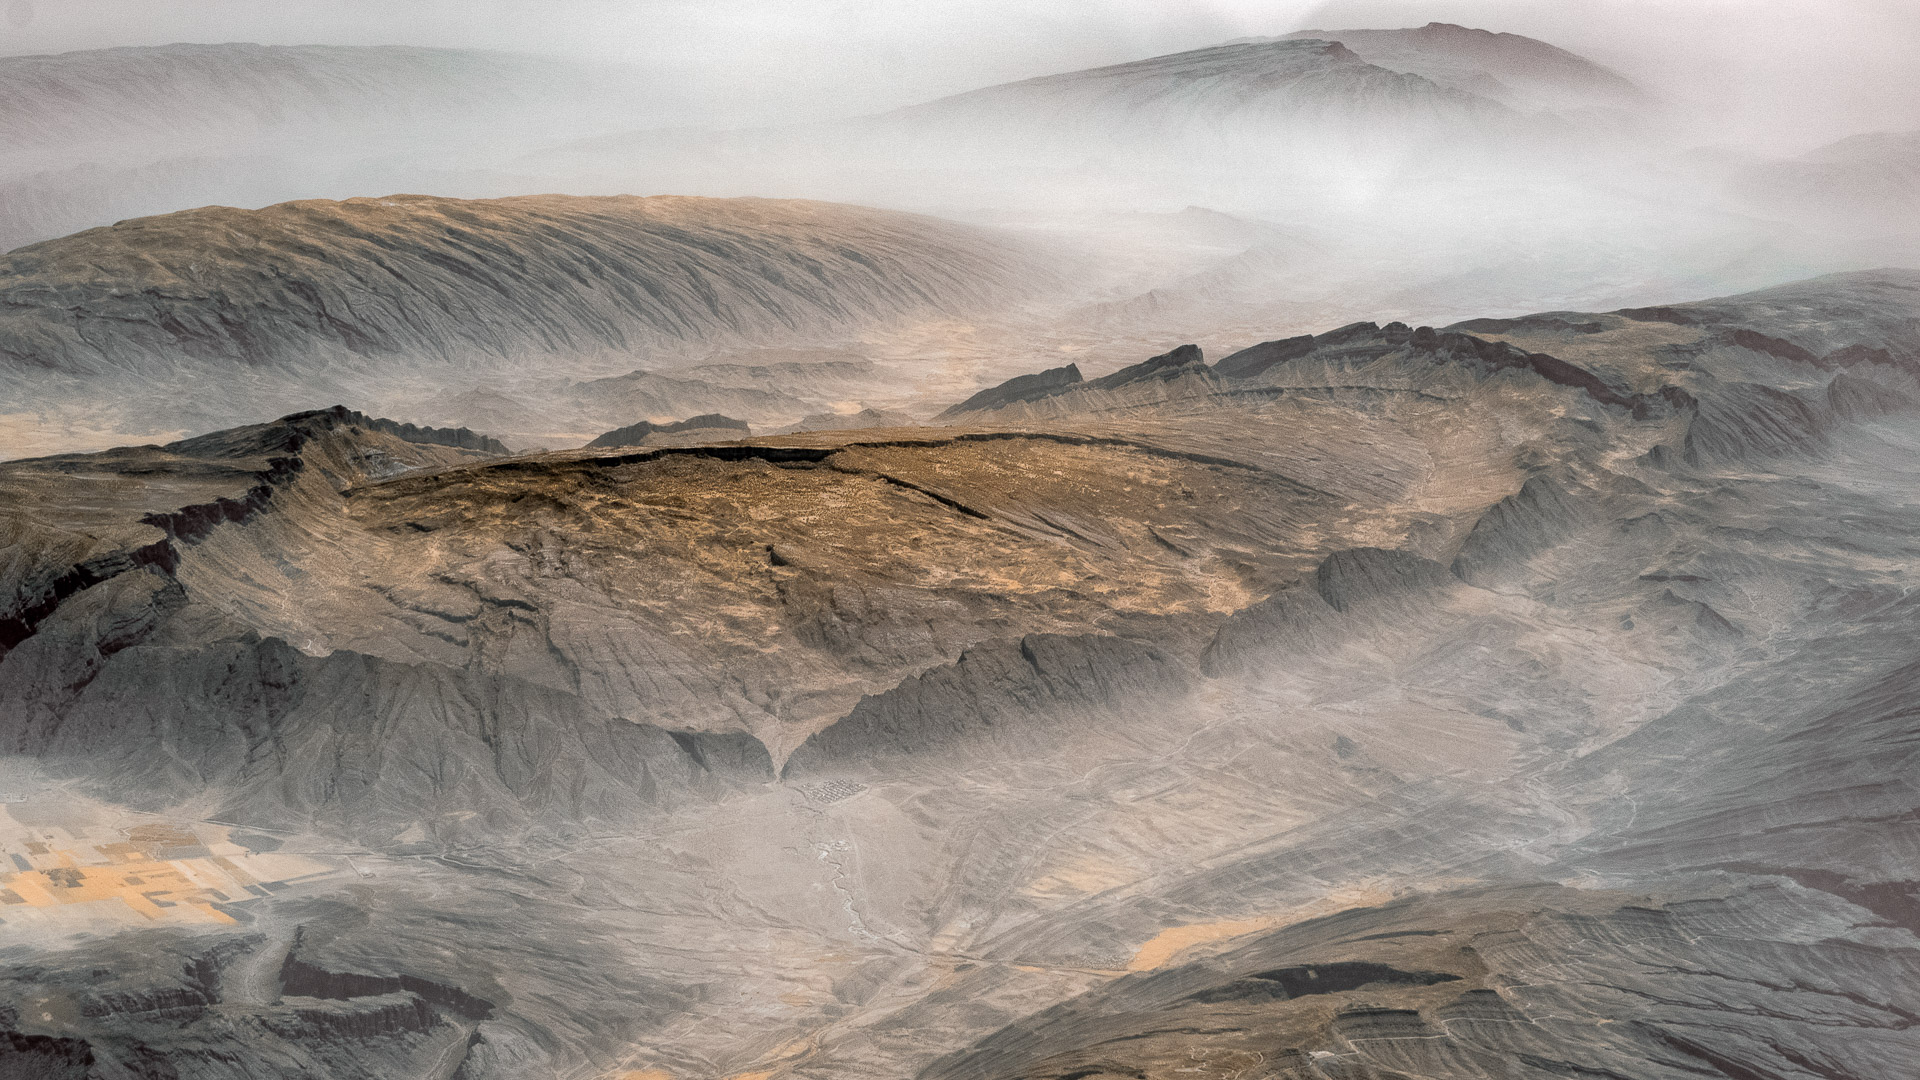 Oman, aerial image, infrared, rocks, mountains